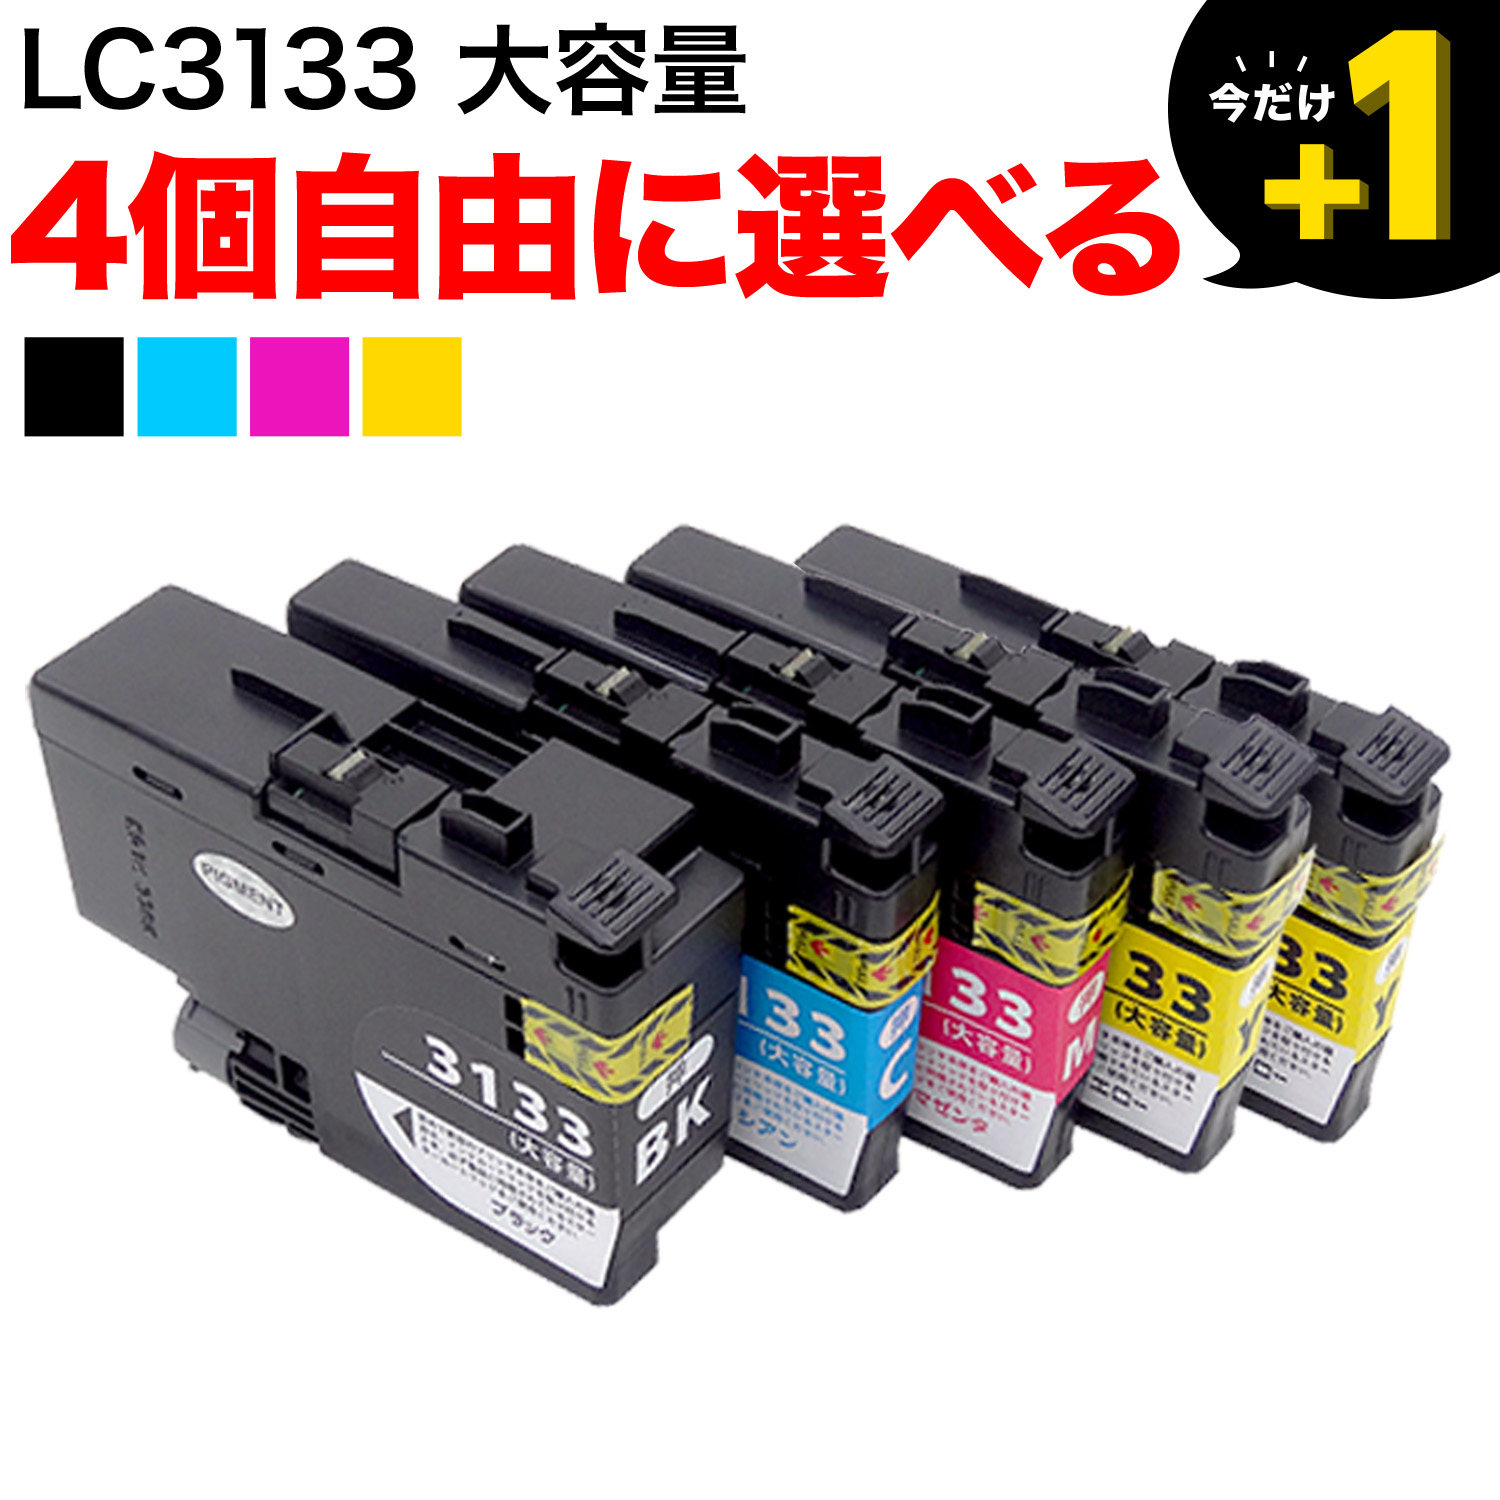 LC3133 ブラザー用 互換インクカートリッジ 自由選択4個セット フリー